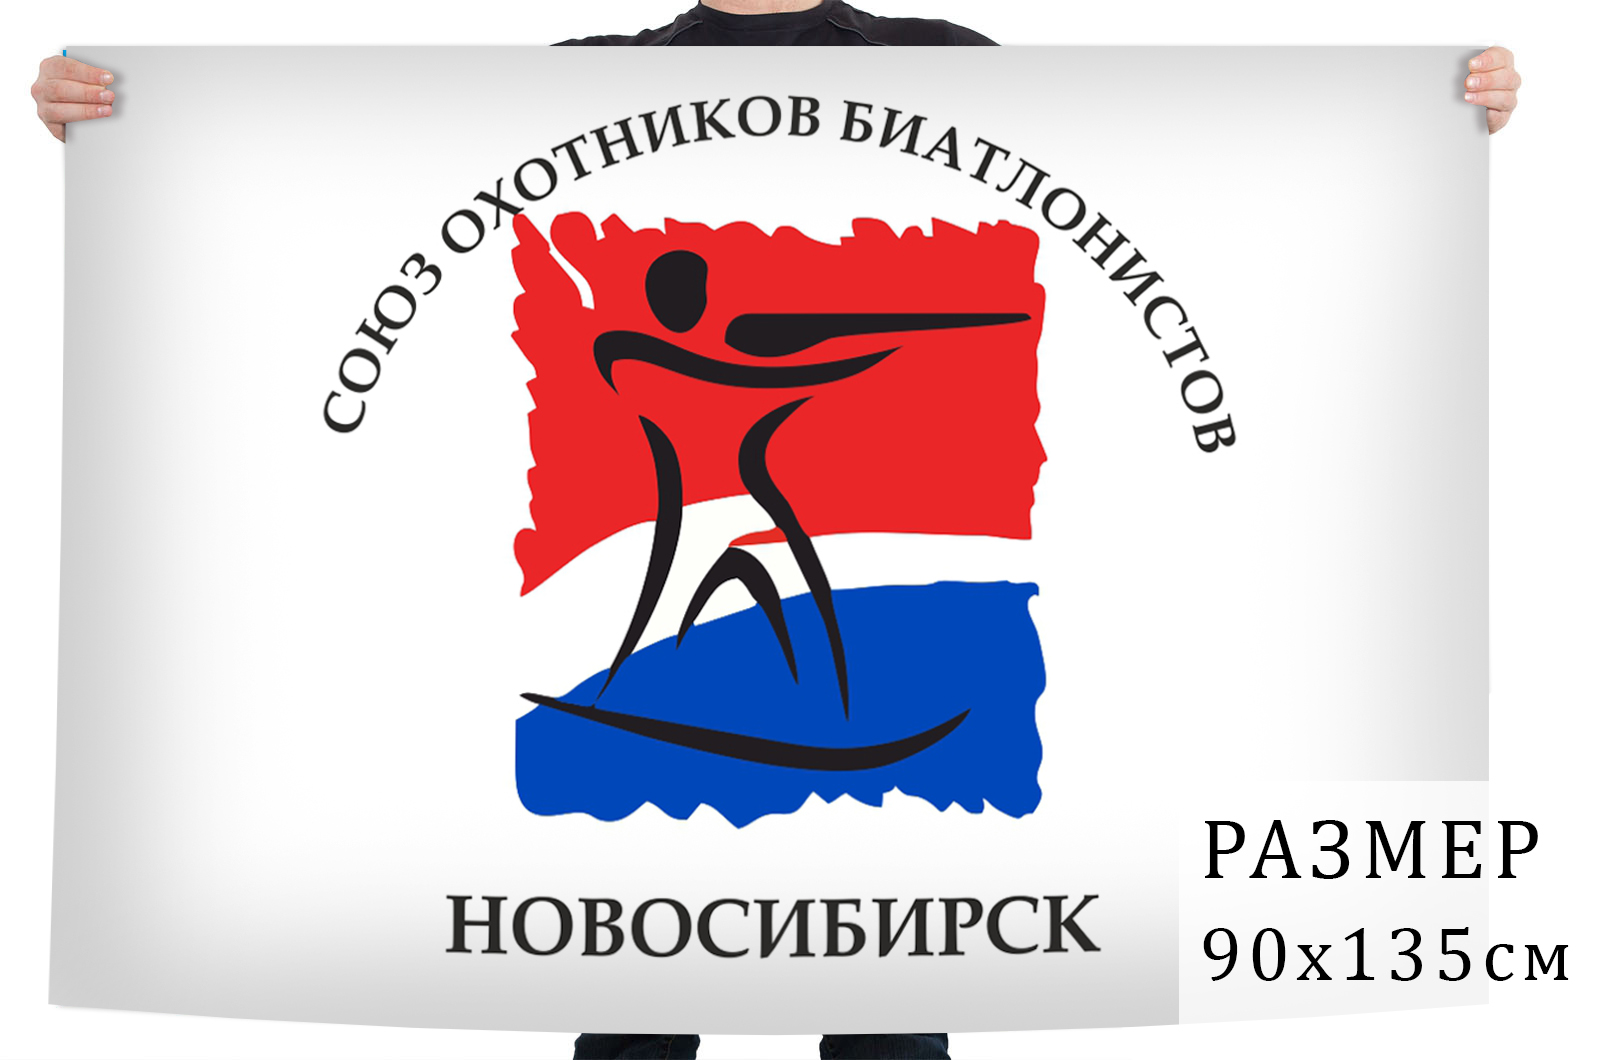 Флаг Союза охотников-биатлонистов